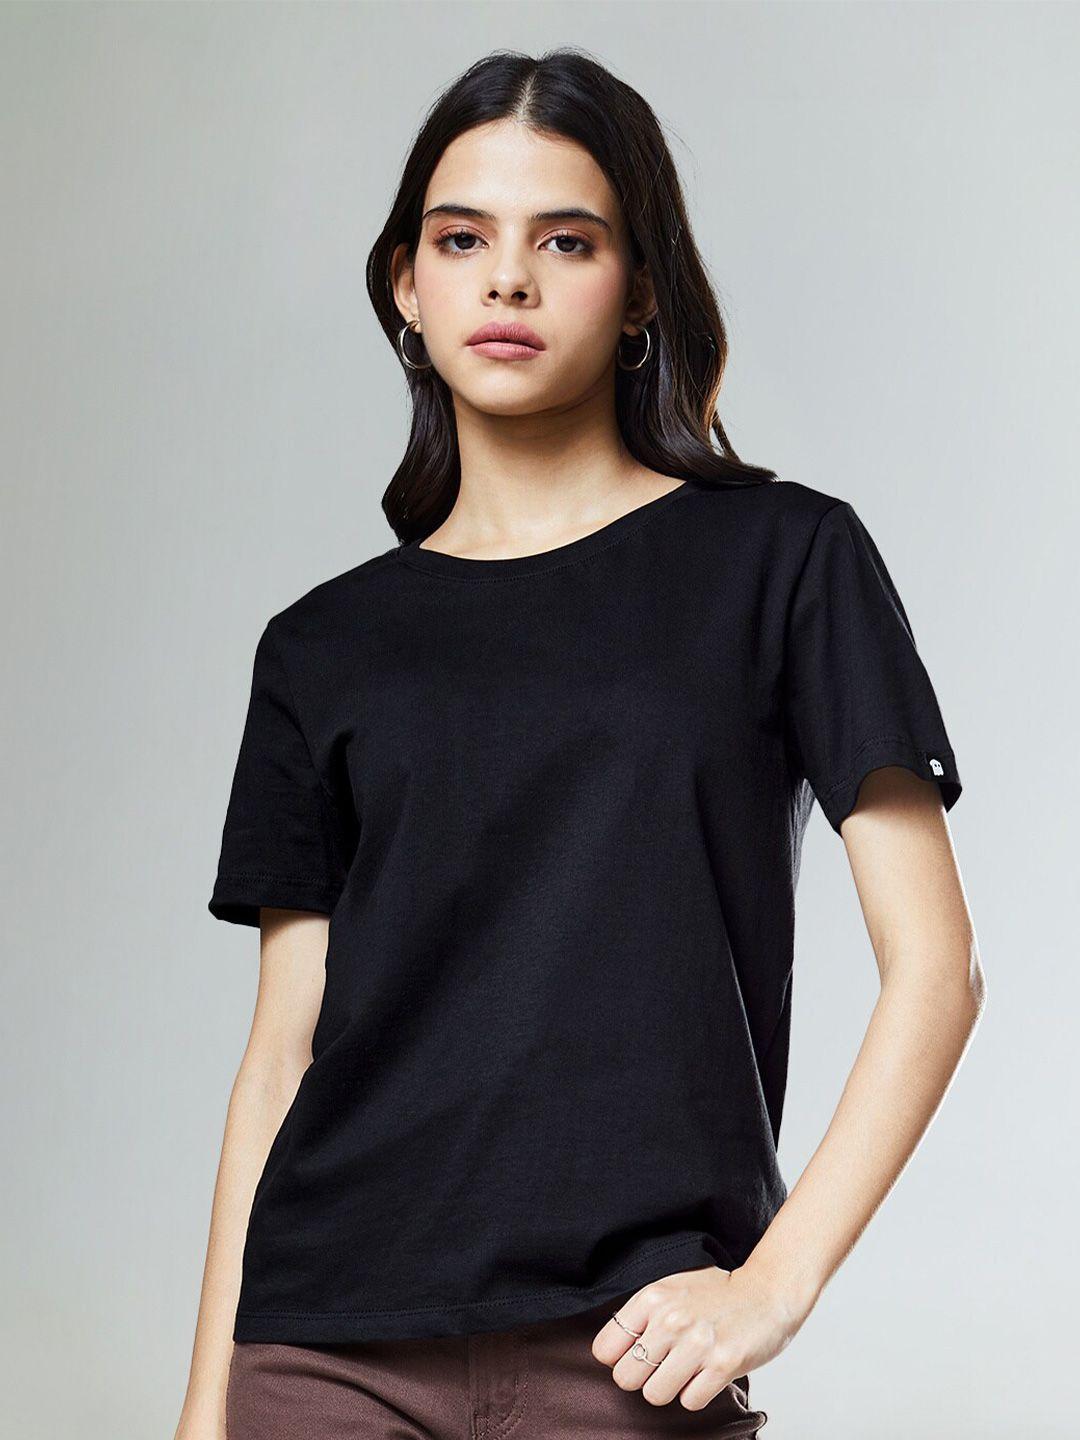 the souled store women black t-shirt